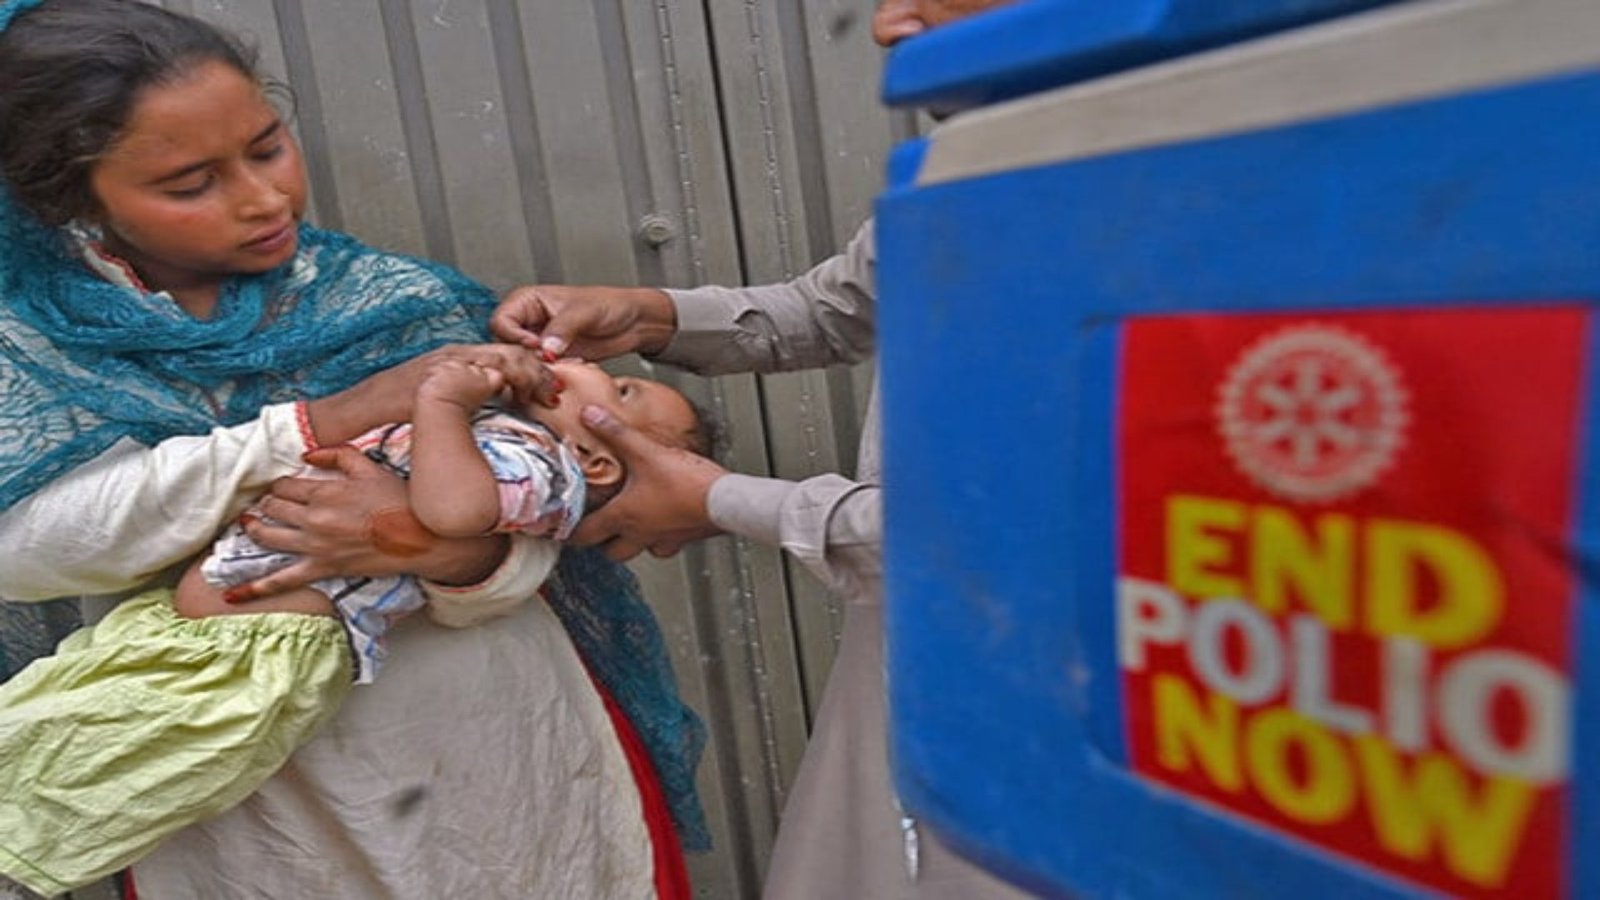 Poliovirus is spreading rapidly in Pakistan